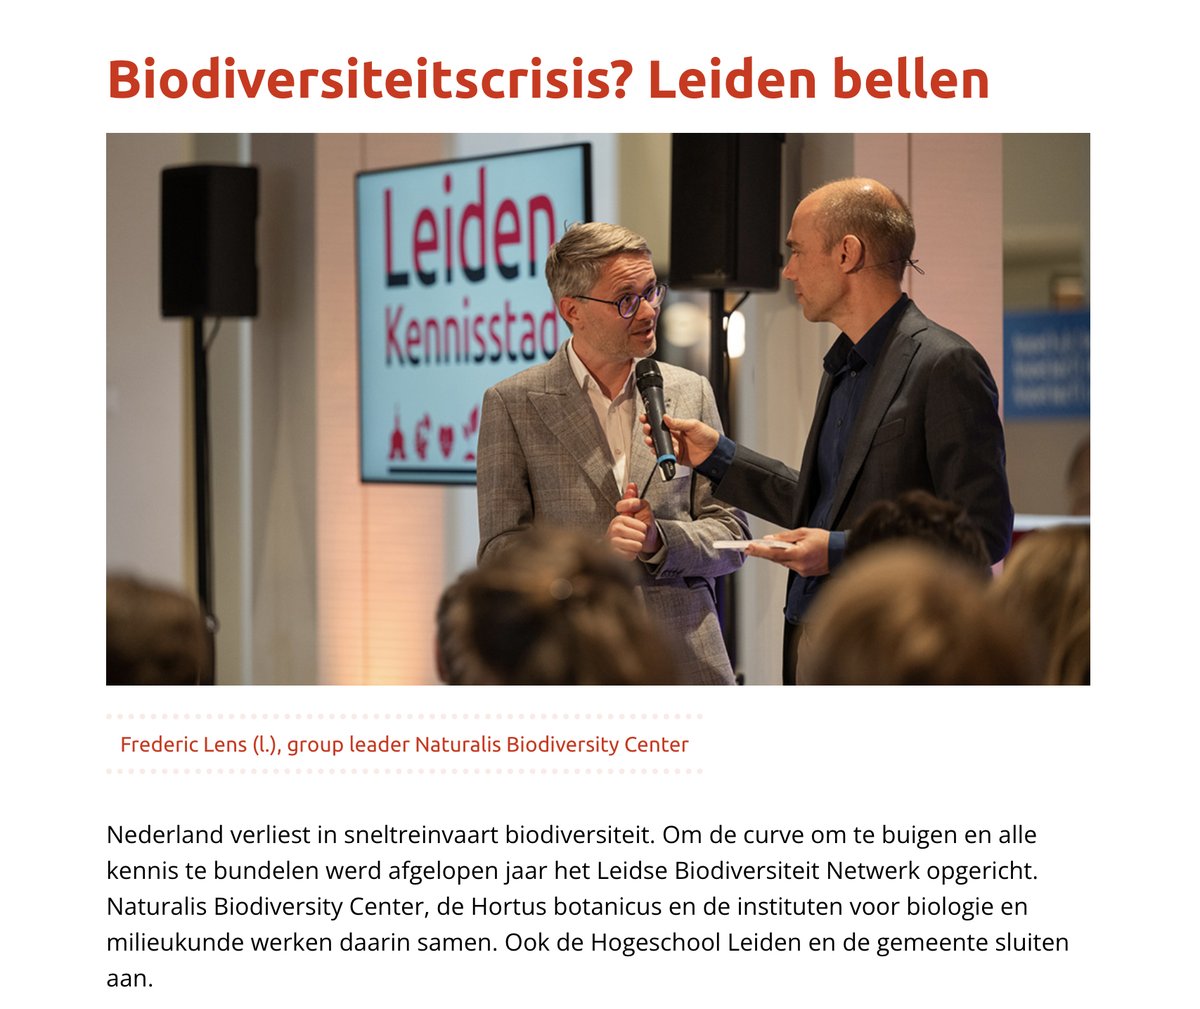 We had a nice outreach event during the Leiden Kennisstad evening meeting. Our Leiden Biodiversity network is going strong 🙌 @Naturalis_Sci @UniLeiden @LeidenBiology @cml_biodiv @HSLeidenNL @Kennisstad071 @GemeenteLeiden @HortusLeiden